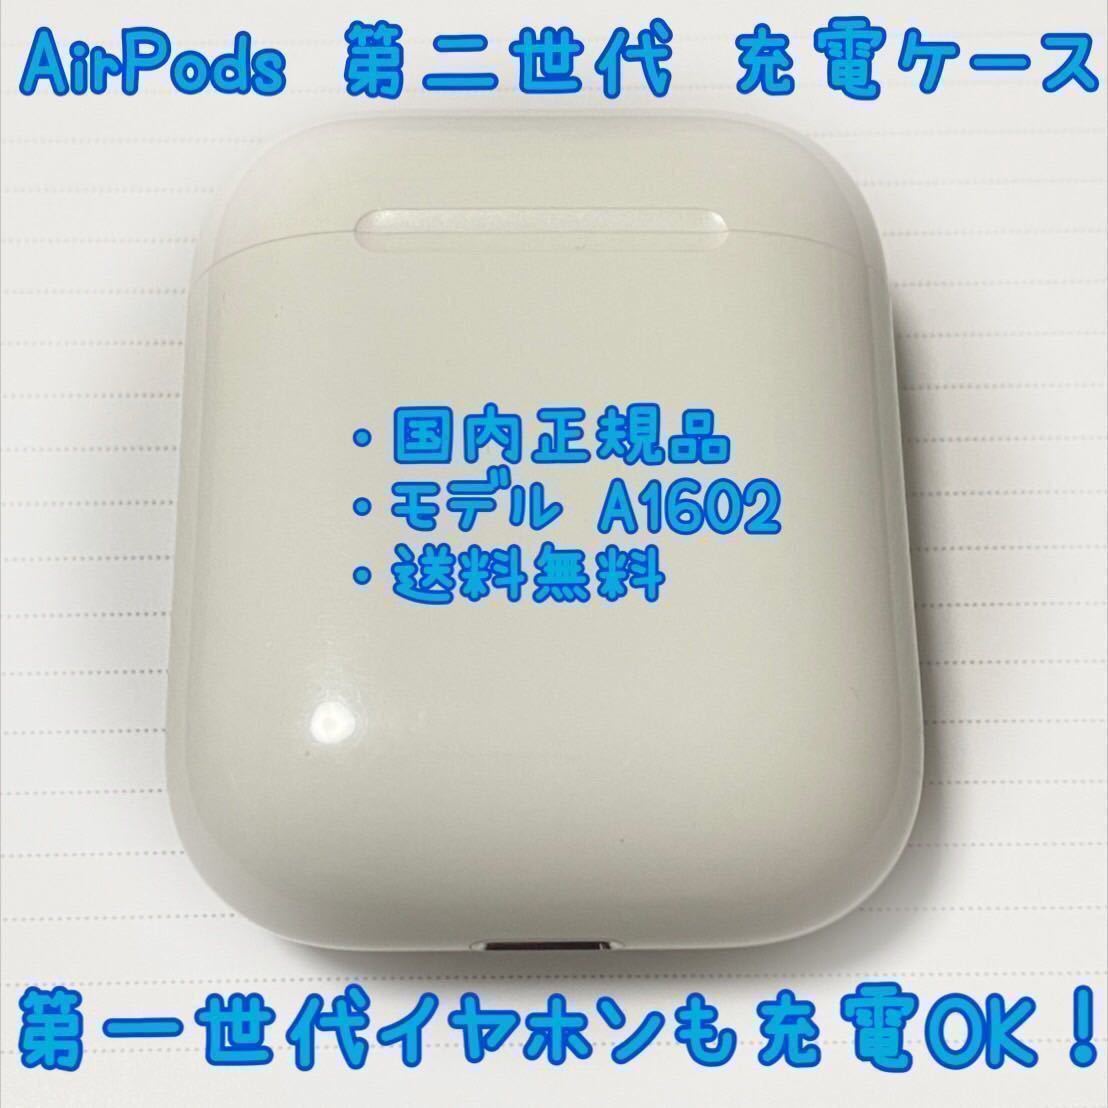 Apple AirPods 第二世代《充電ケースのみ》 - JChere雅虎拍卖代购